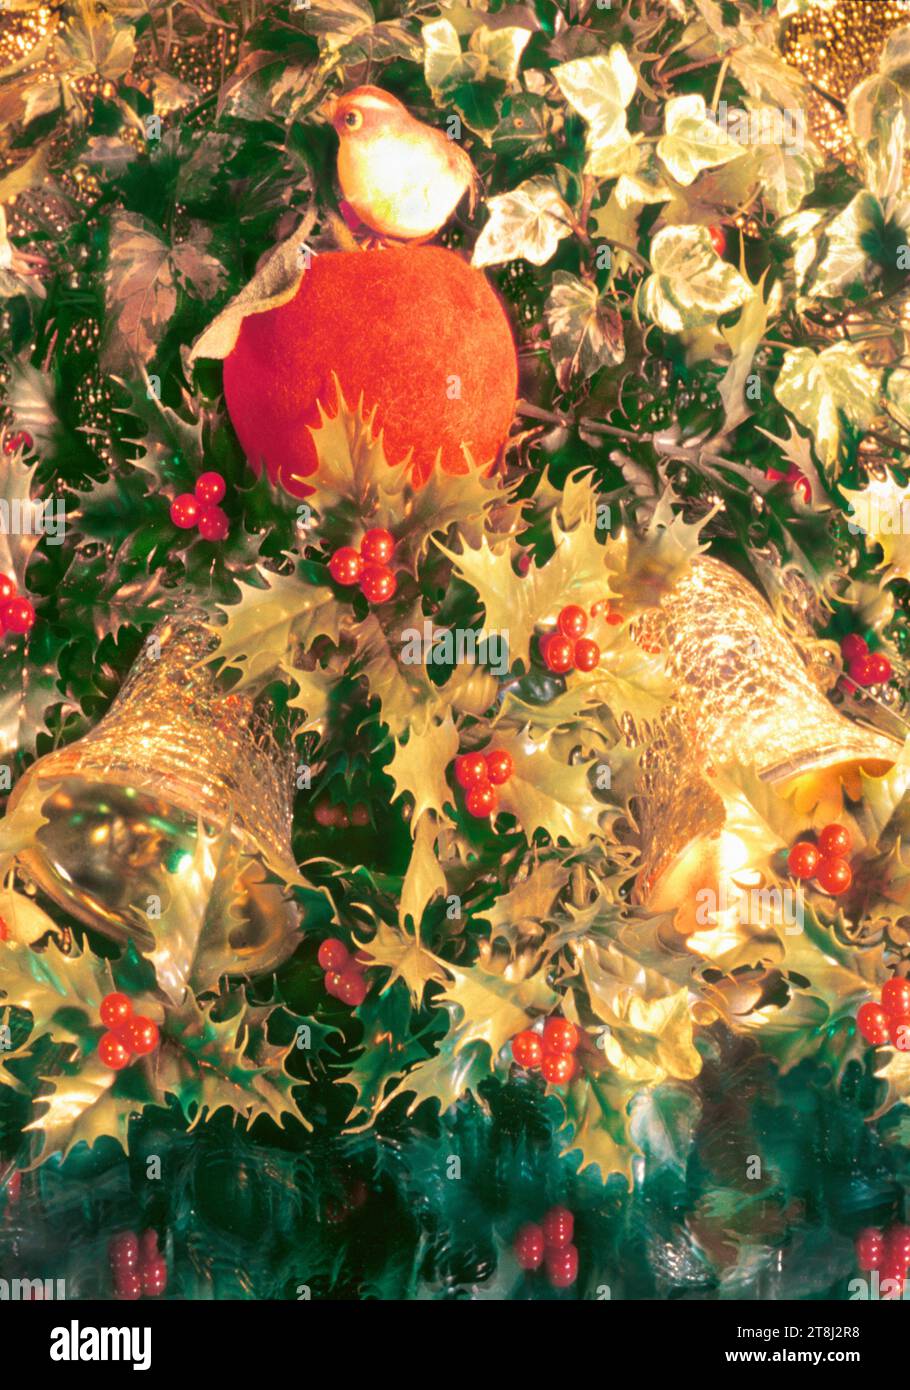 Christmas holiday decorations.Christian festive holiday decor  Mistletoe, berries, gold bells bird and an apple. Stock Photo